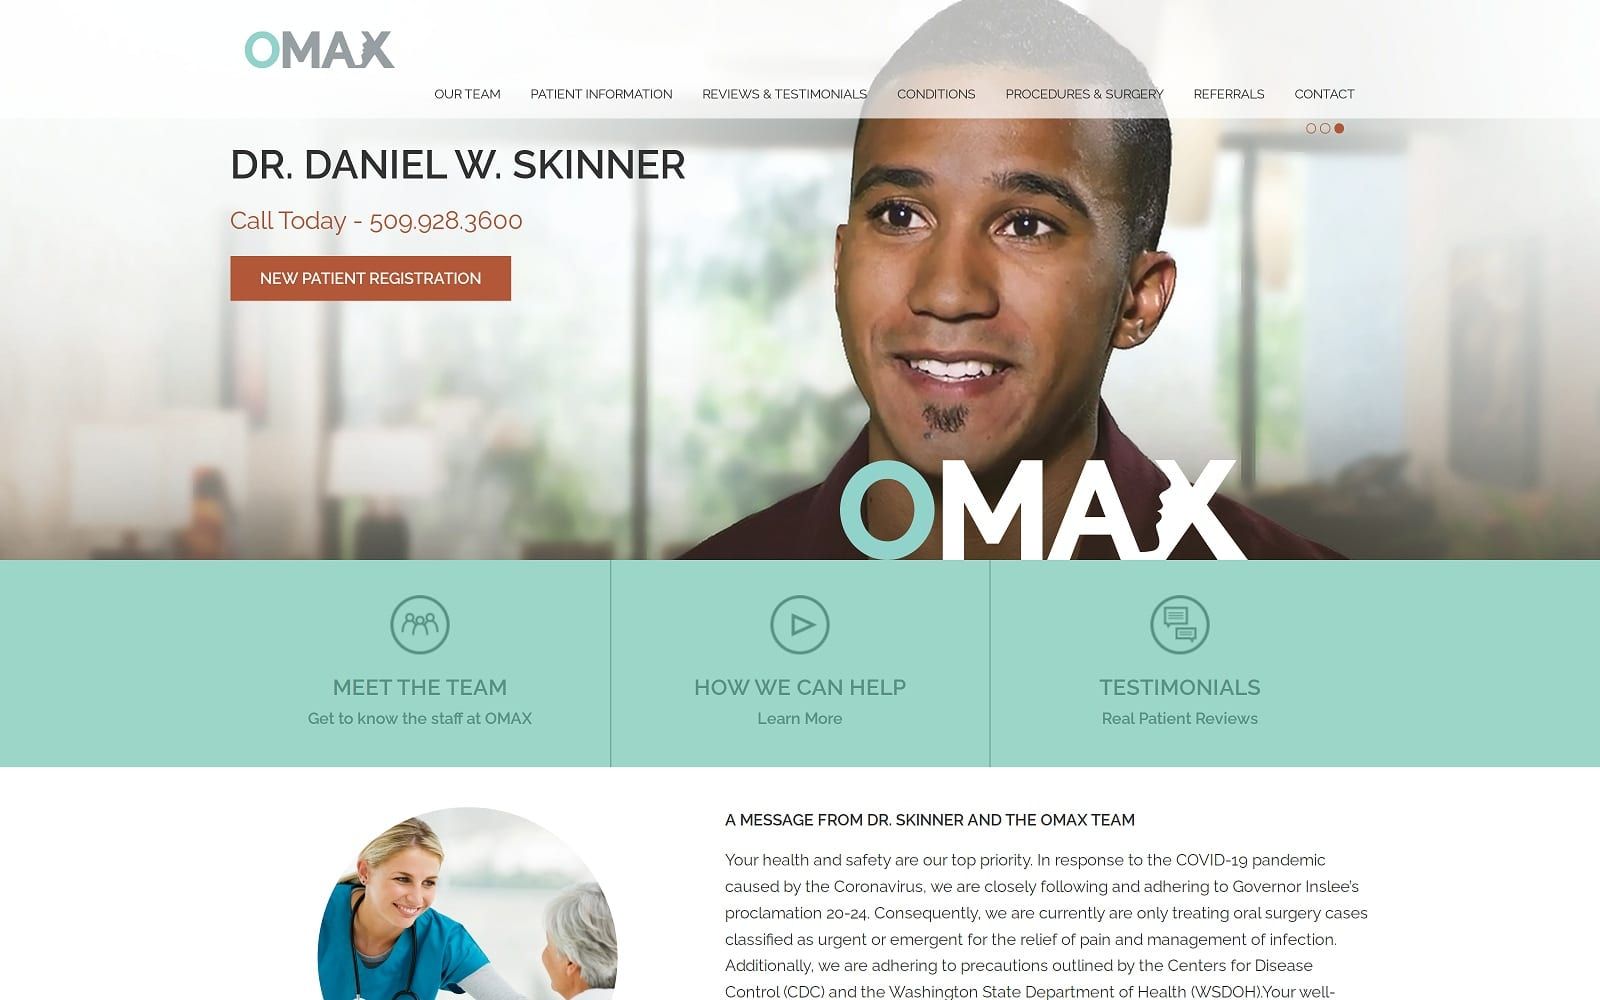 The Screenshot of OMAX Oral and Maxillofacial Surgery omaxsurgery.com Dr. Daniel Skinner Website